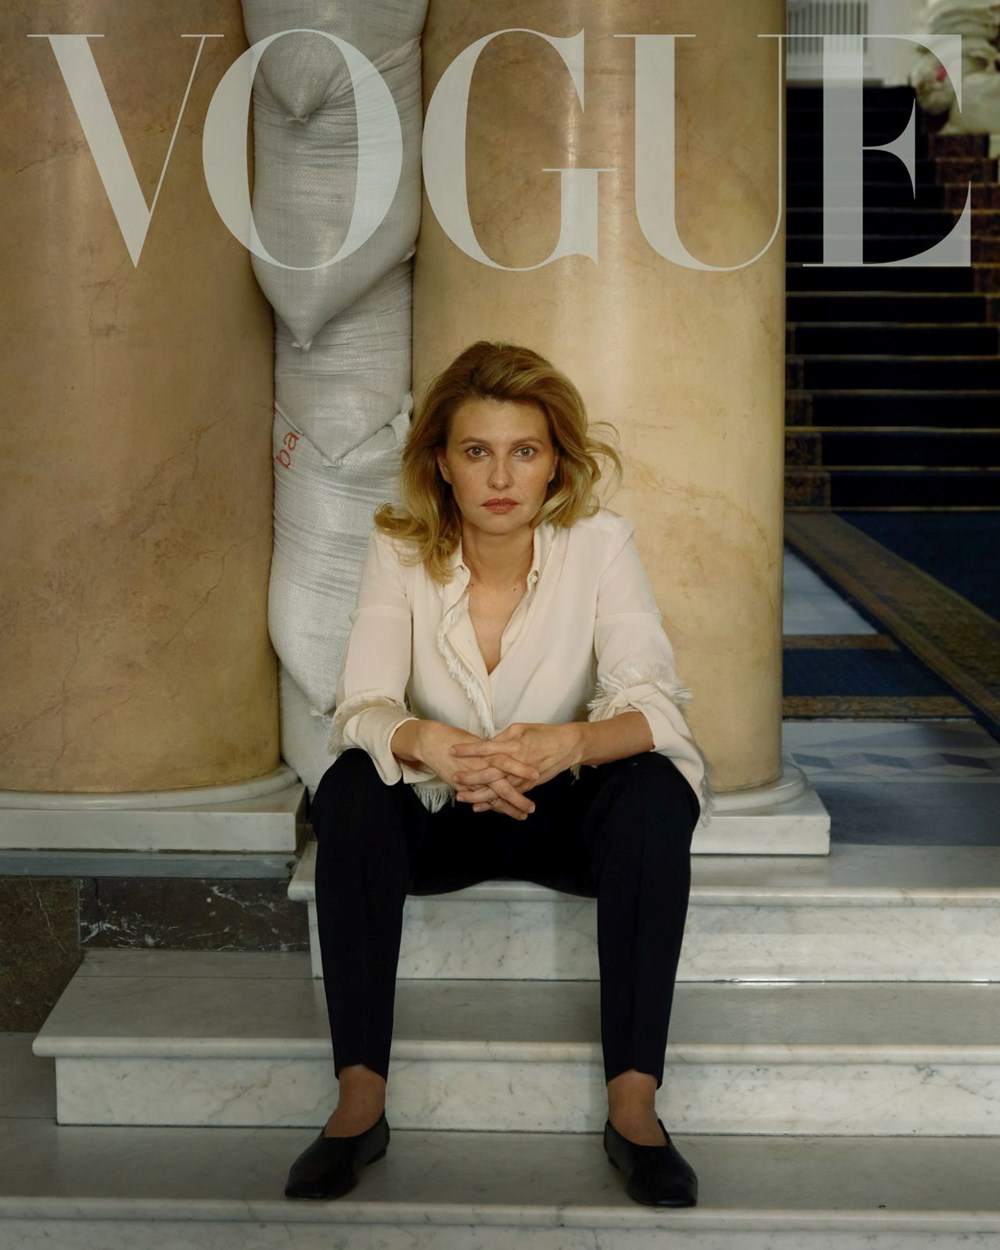 Ukrayna Başkanı Vladimir Zelenski ve First Lady Olena Zelenska Amerikan Vogue dergisine röportaj verdi - 1